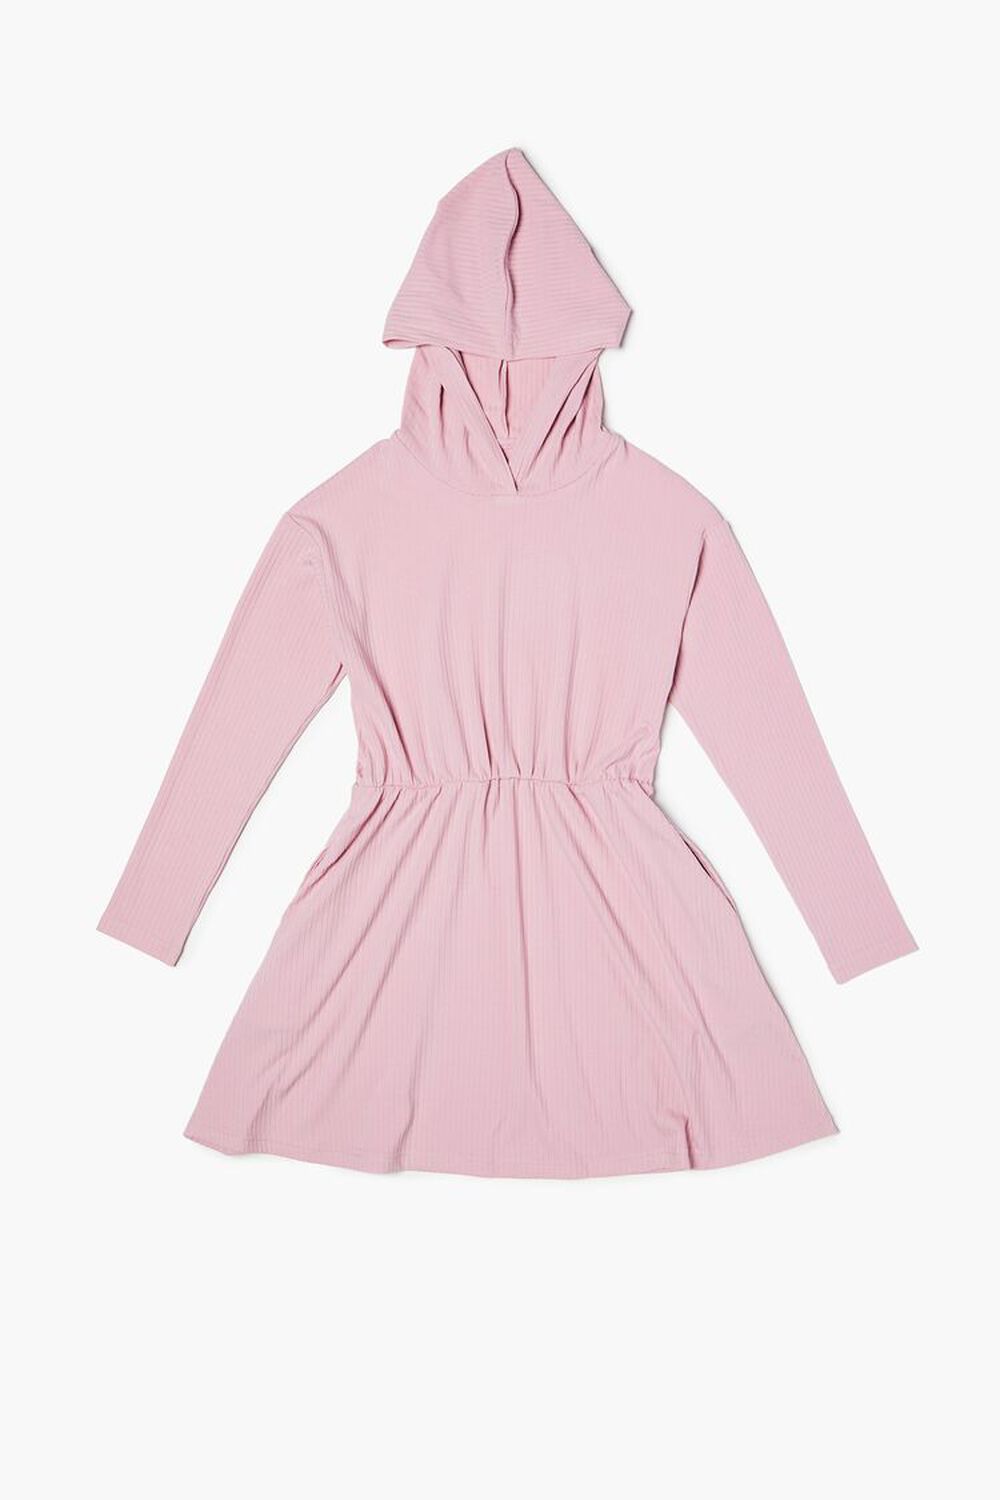 MAUVE Girls Hooded Drop-Sleeve Dress (Kids), image 1